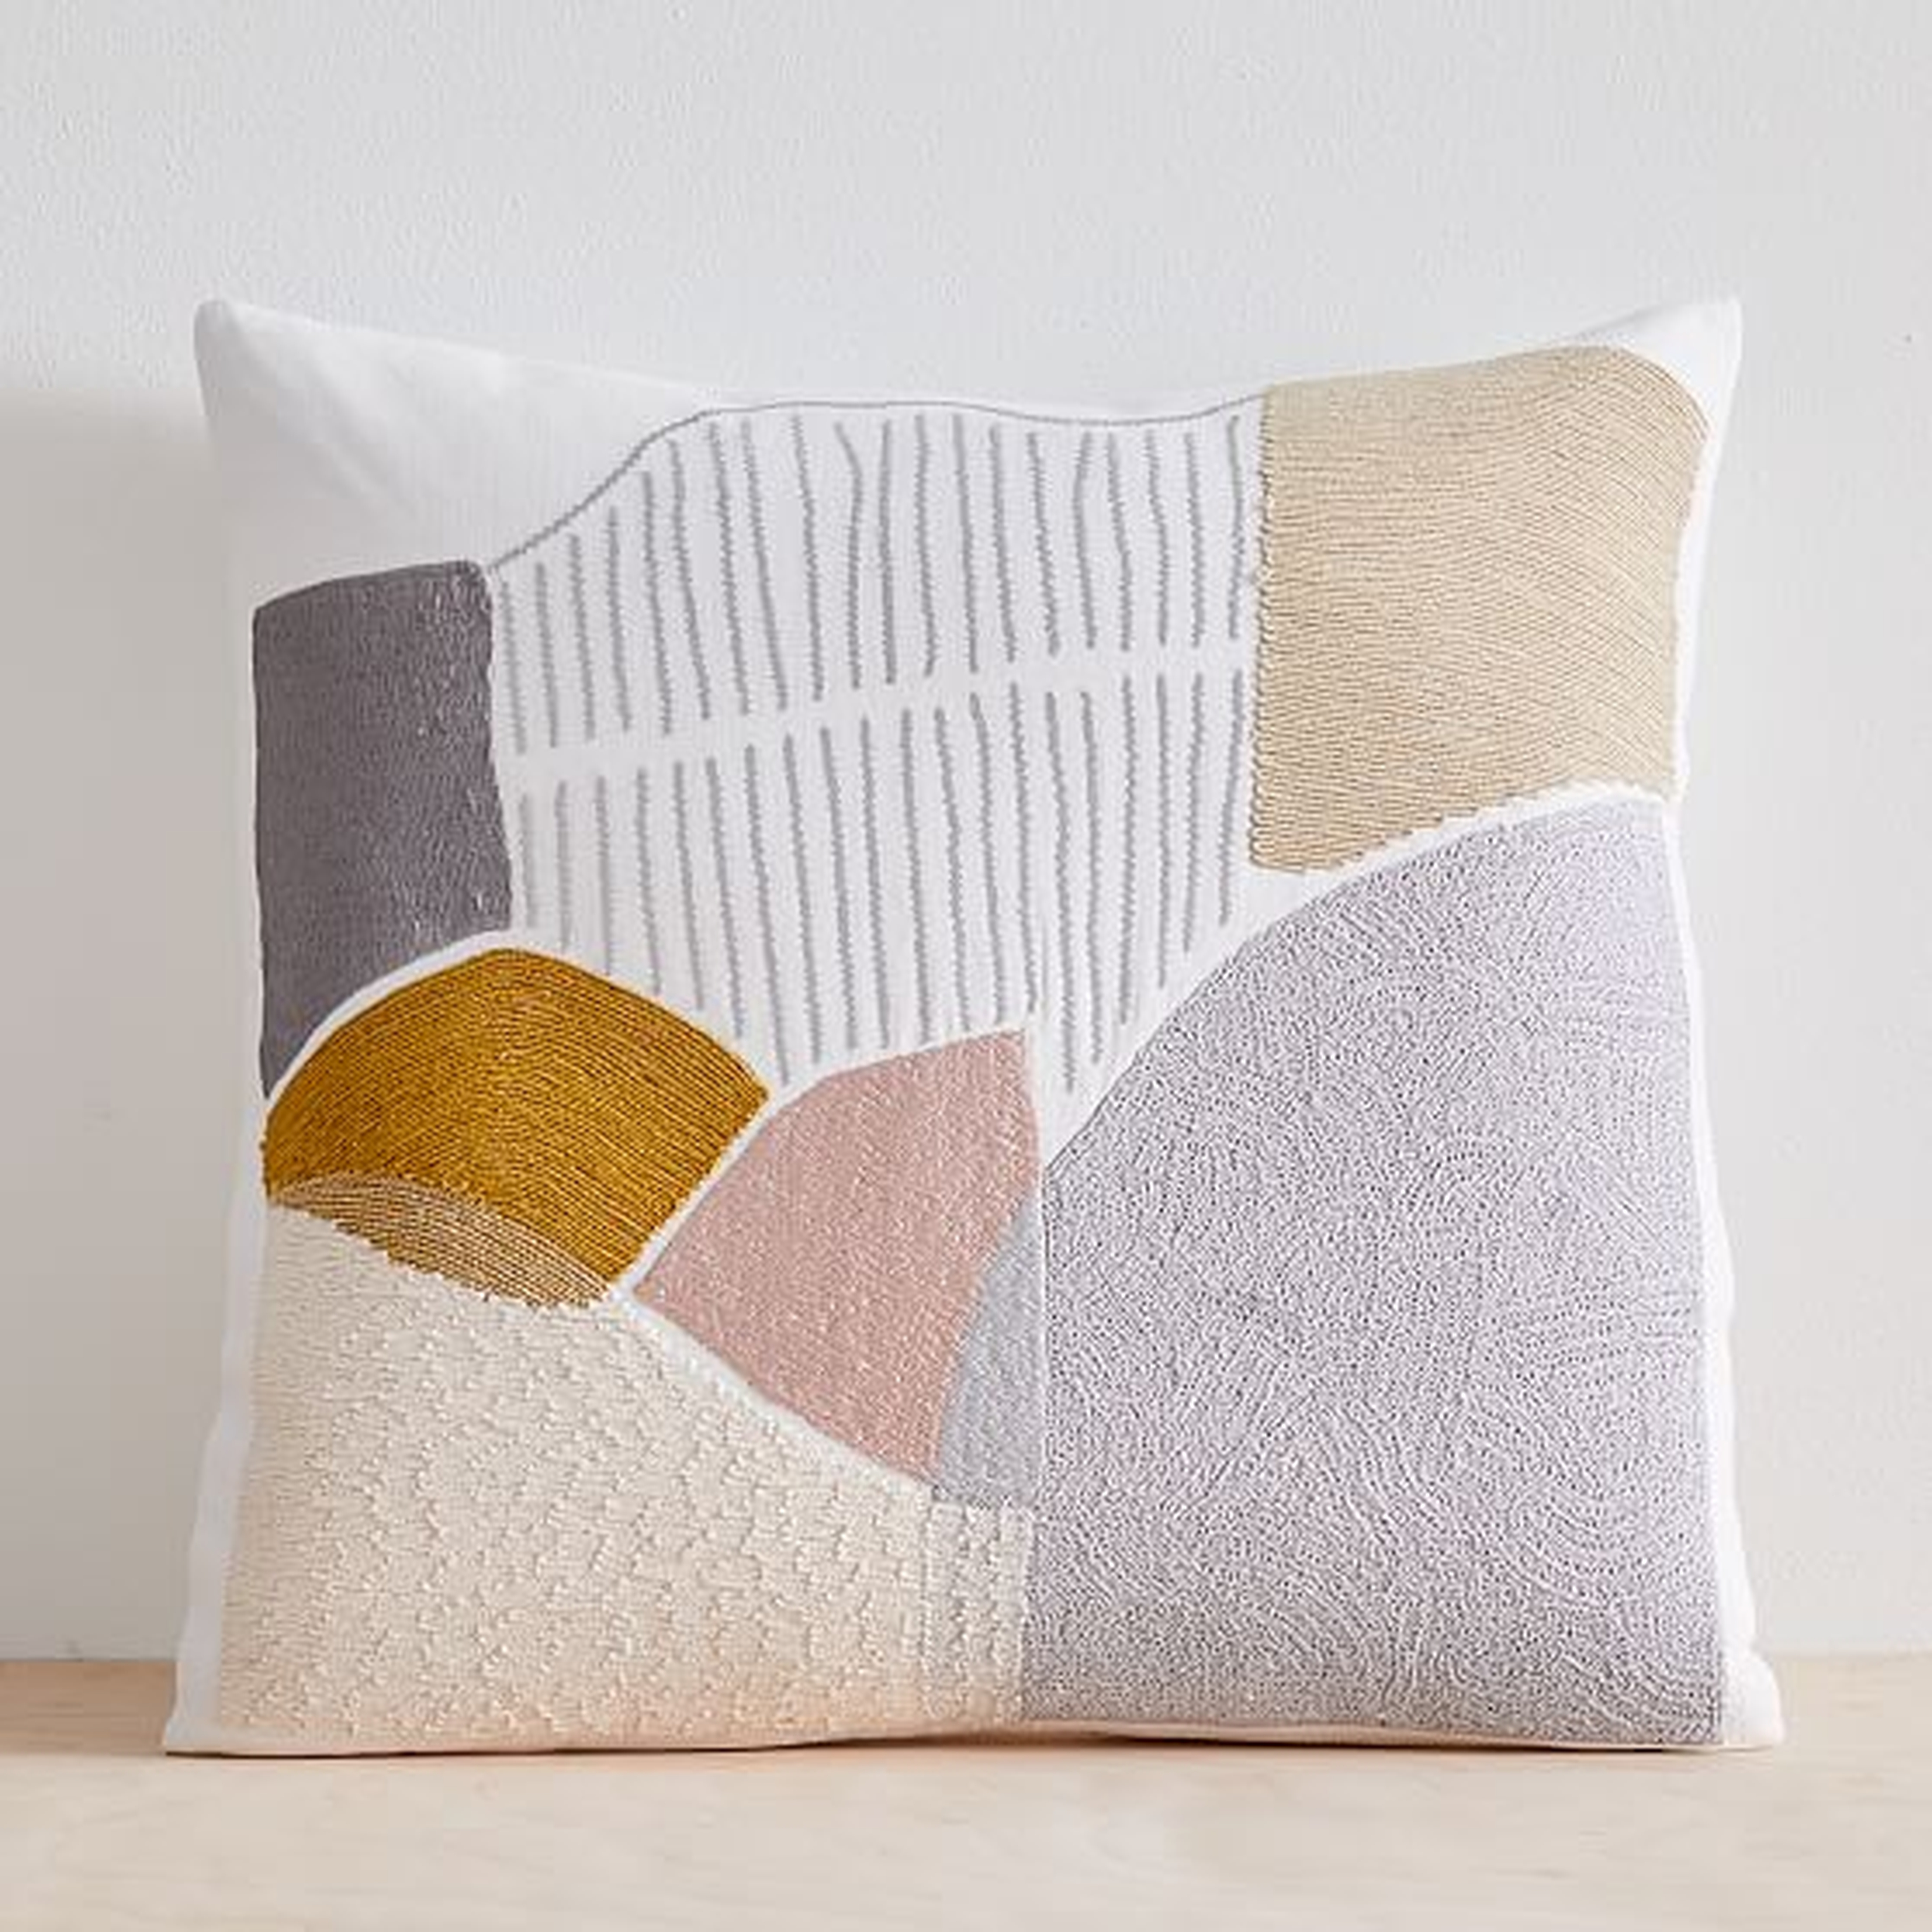 Textural Shapes Pillow Cover, Set of 2, Multi, 20"x20" - West Elm